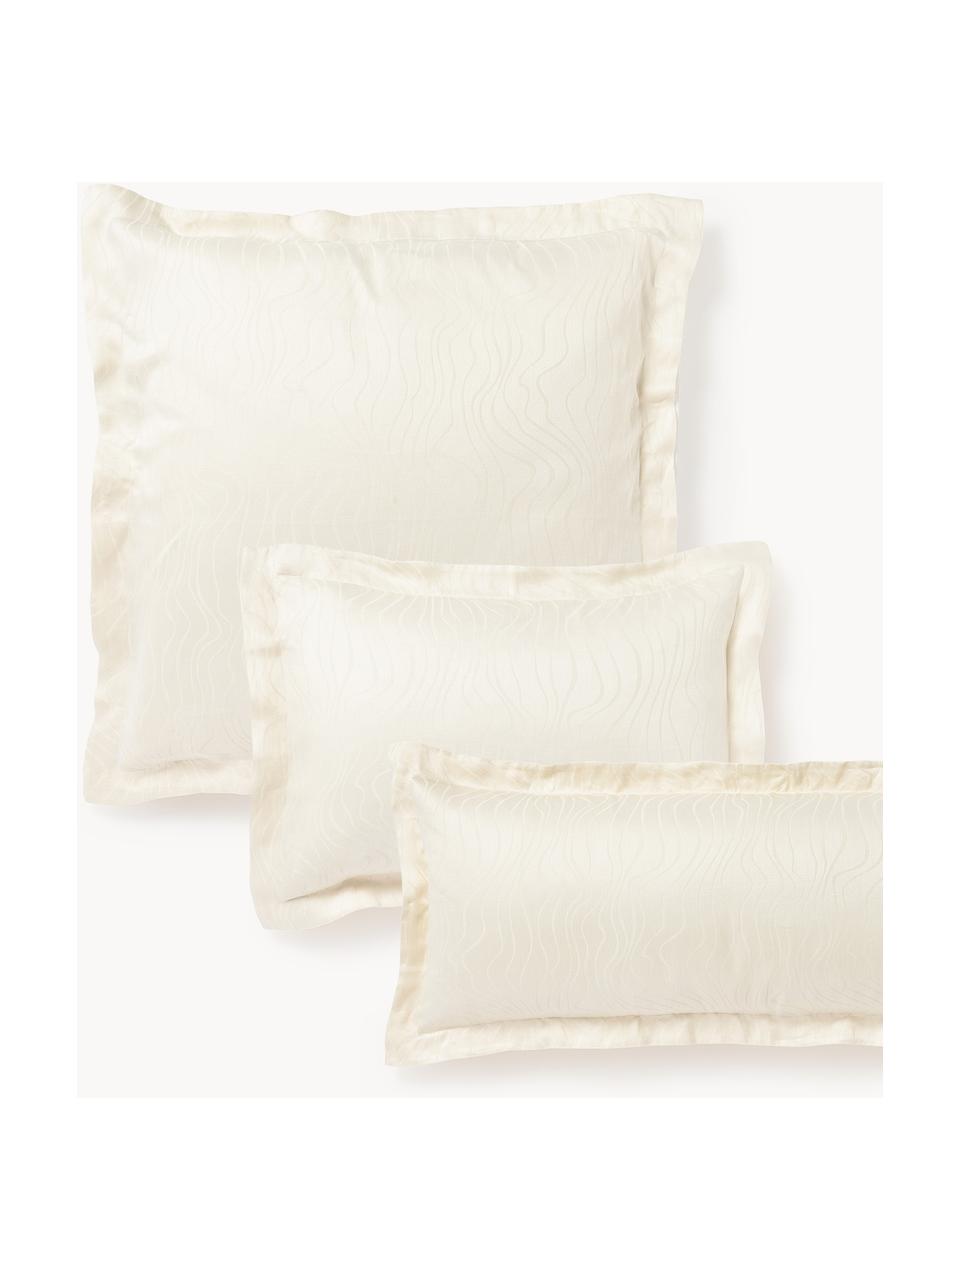 Funda de almohada de lino Malia, Off White, An 45 x L 110 cm